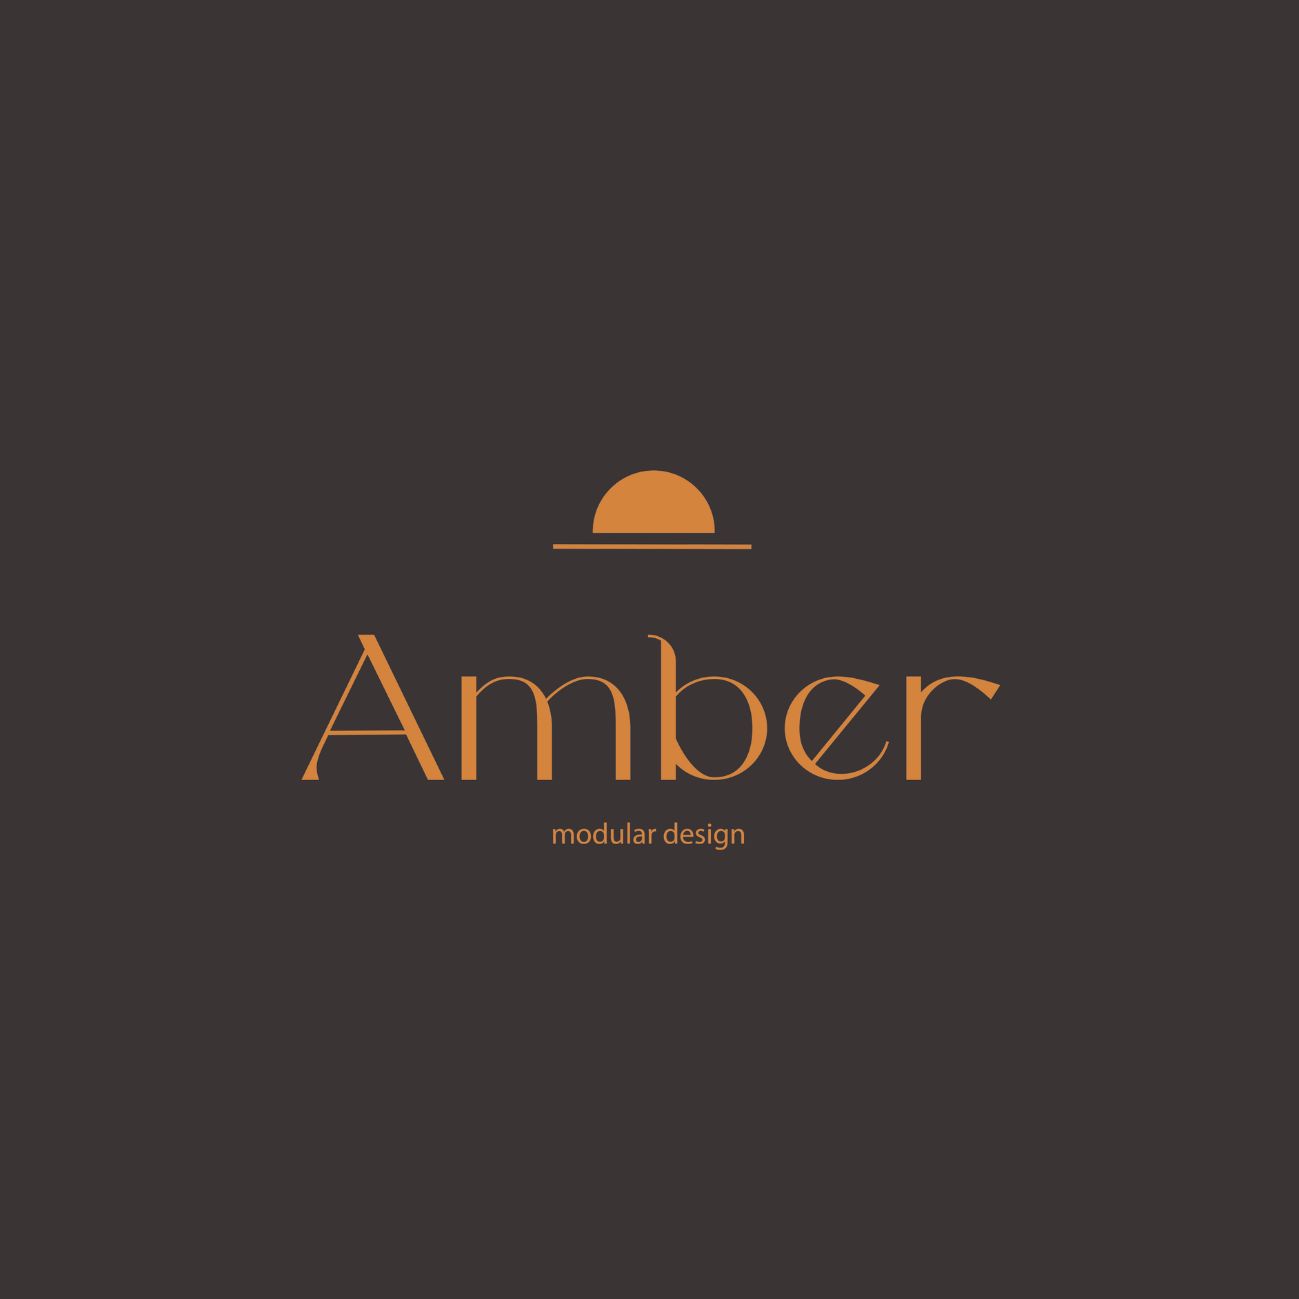 Amber Modular Design